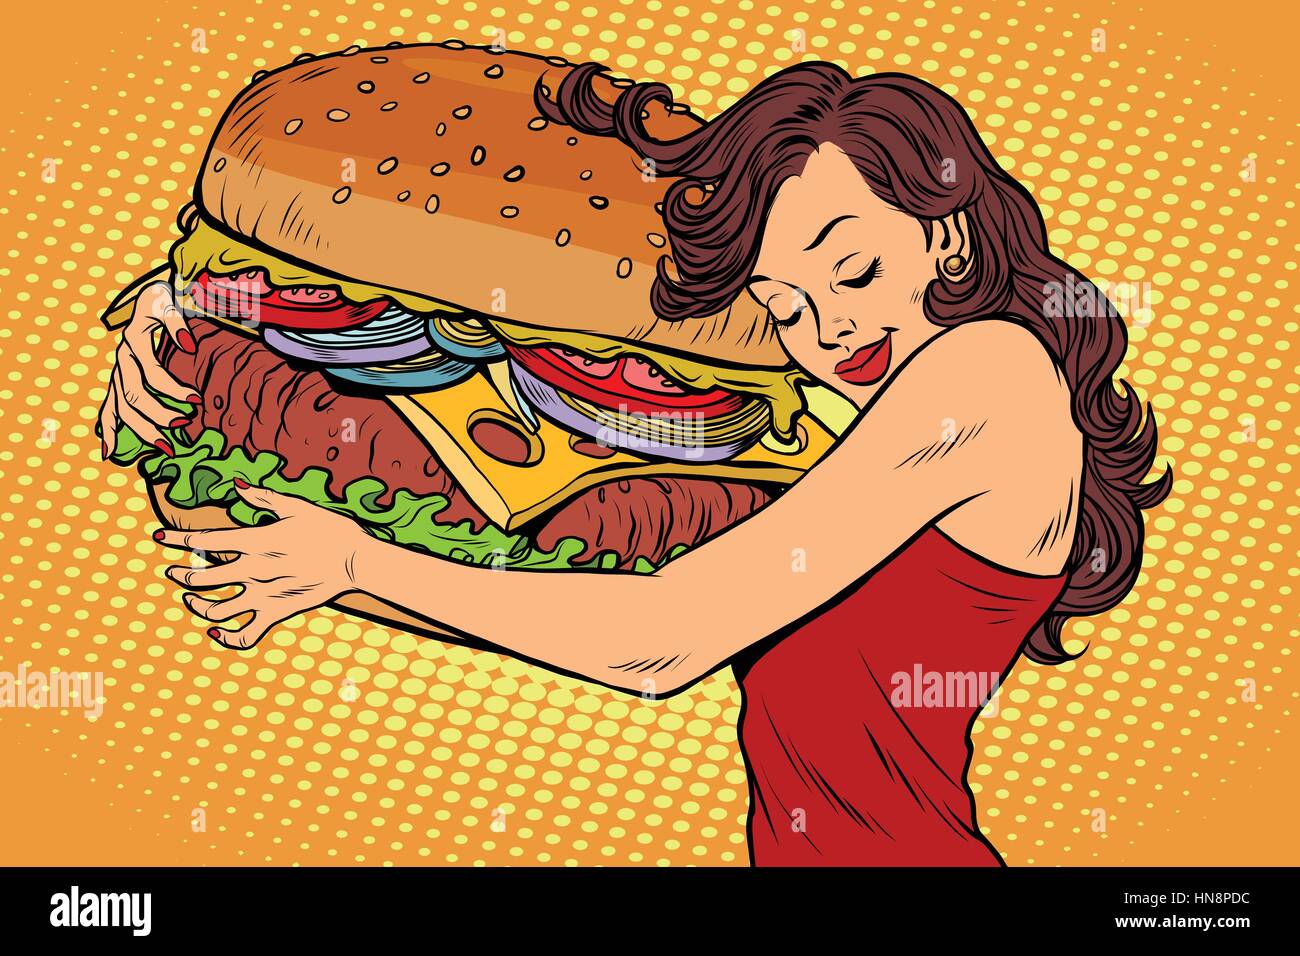 Schöne junge Frau umarmt Burger. Pop Art retro Vintage Vektorgrafik. Fast Foodrestaurant, Ernährung und hunger Stock Vektor